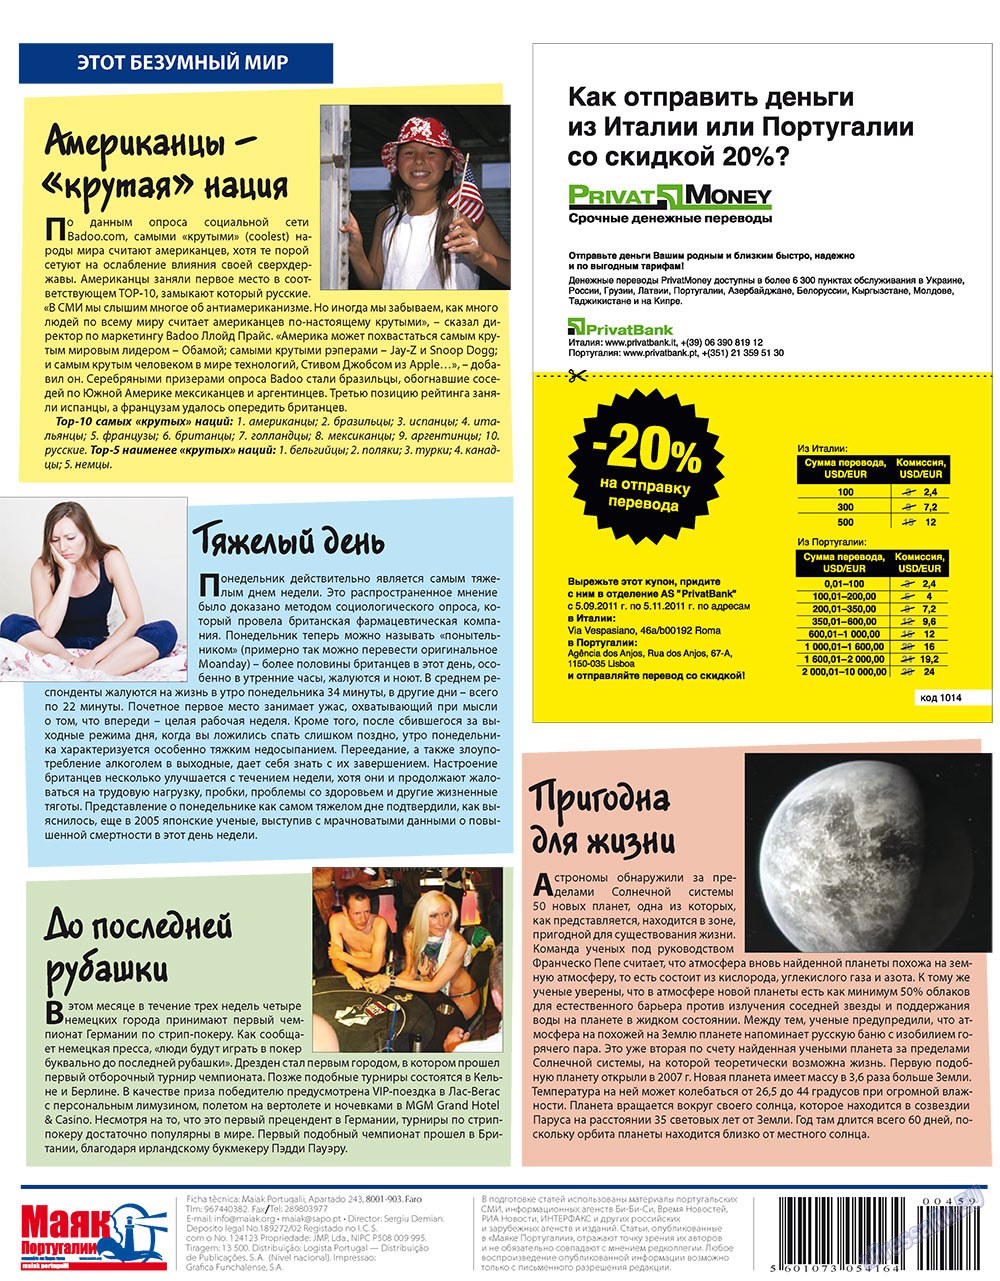 Маяк Португалии, газета. 2011 №459 стр.40